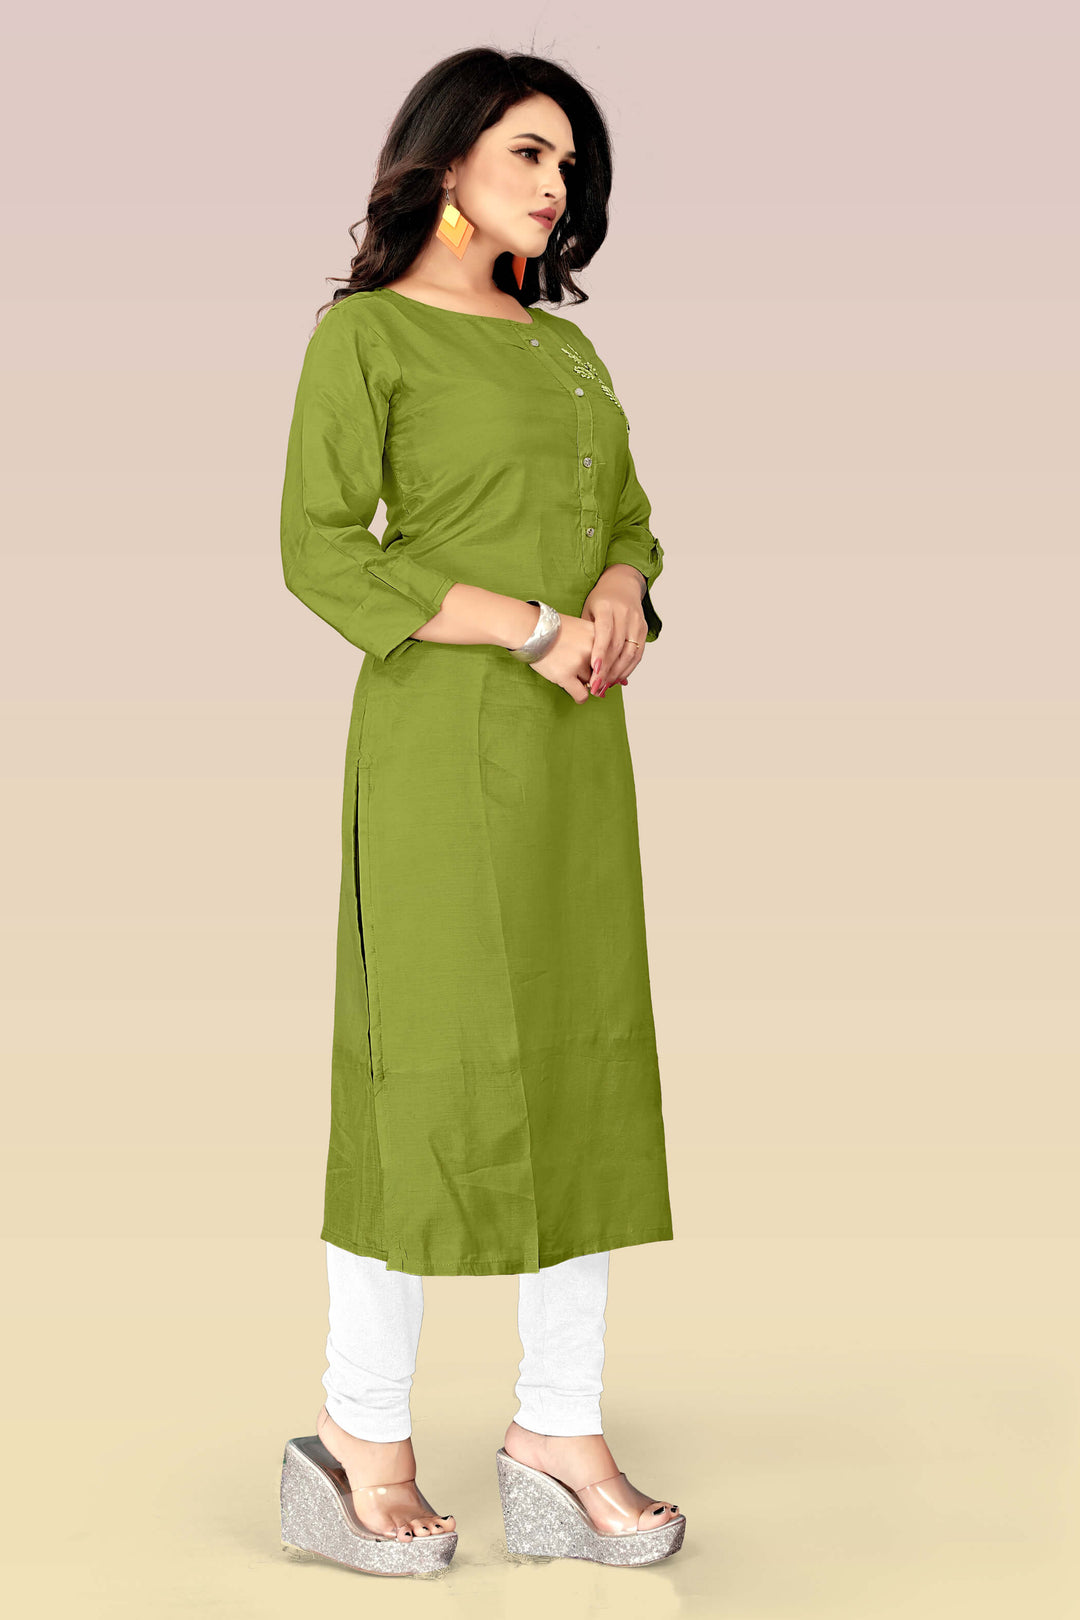 Designer Silk Olive green kurti with stylish handwork